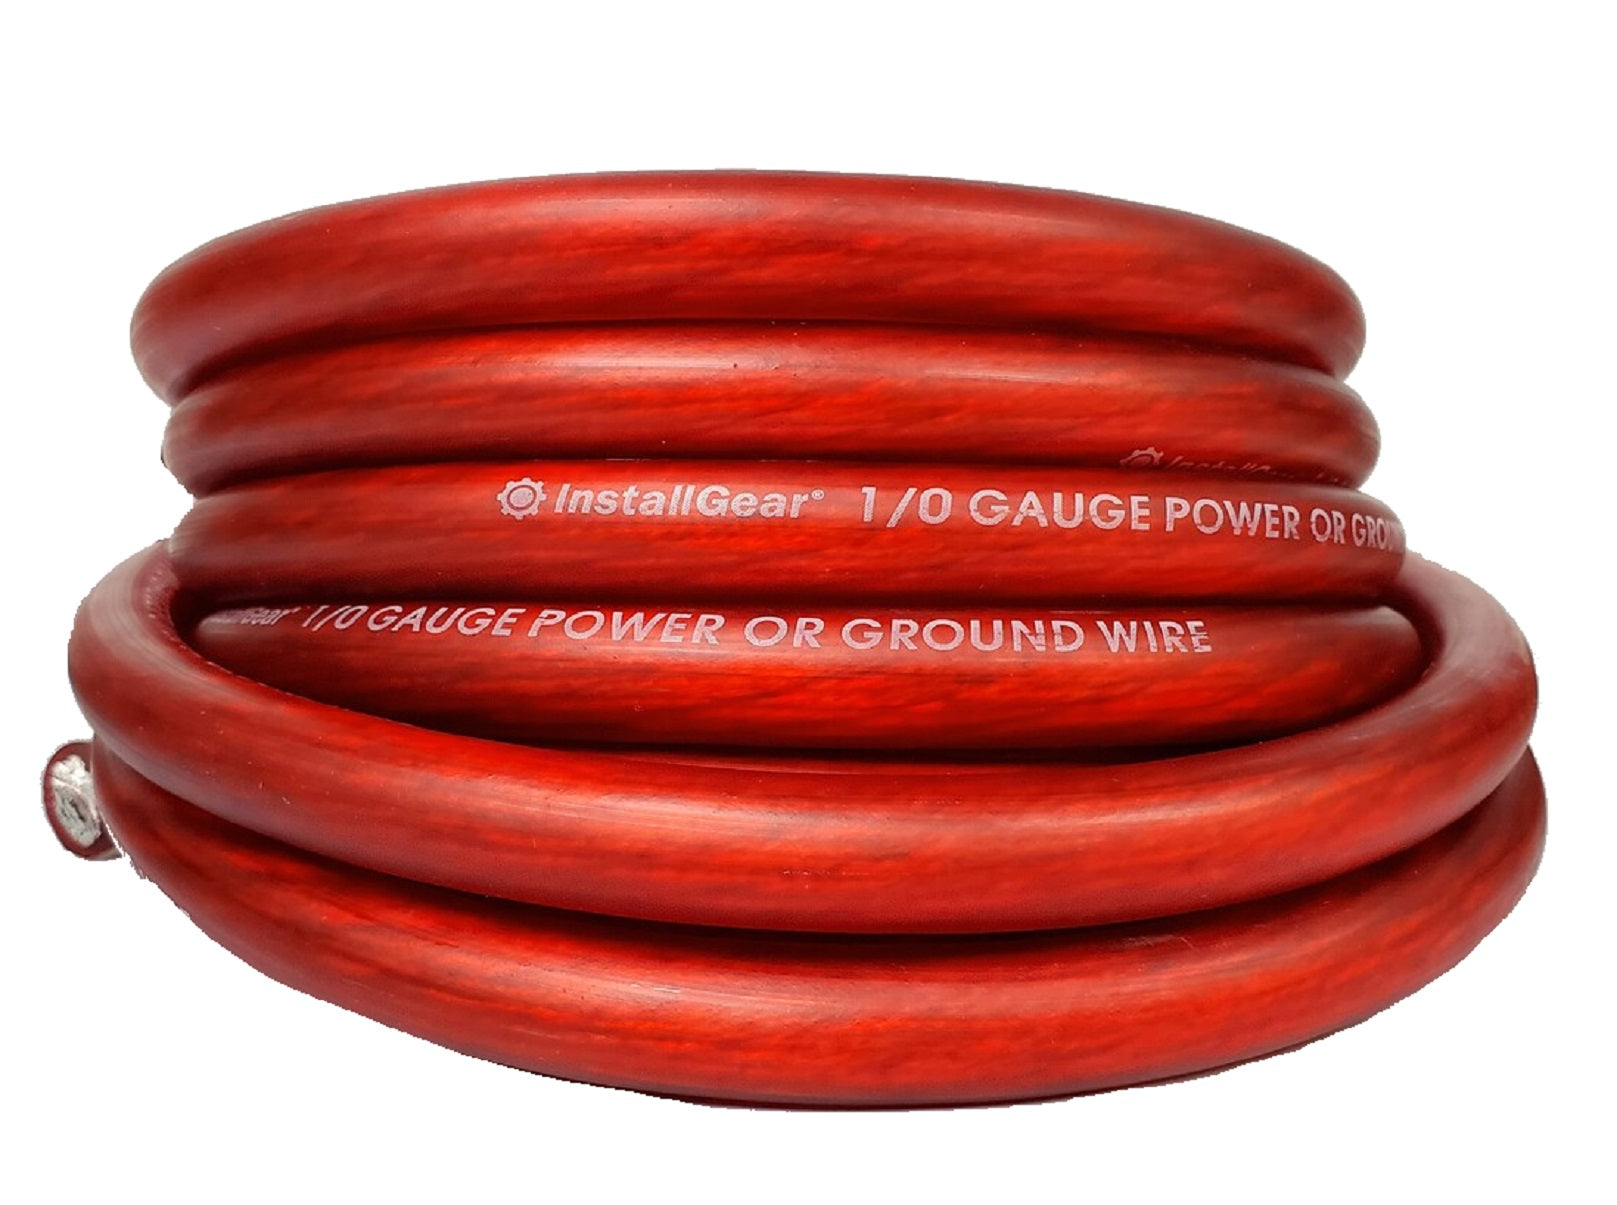 InstallGear 1/0 Gauge Red Wire AWG CCA Power or Ground Wire 25-Feet